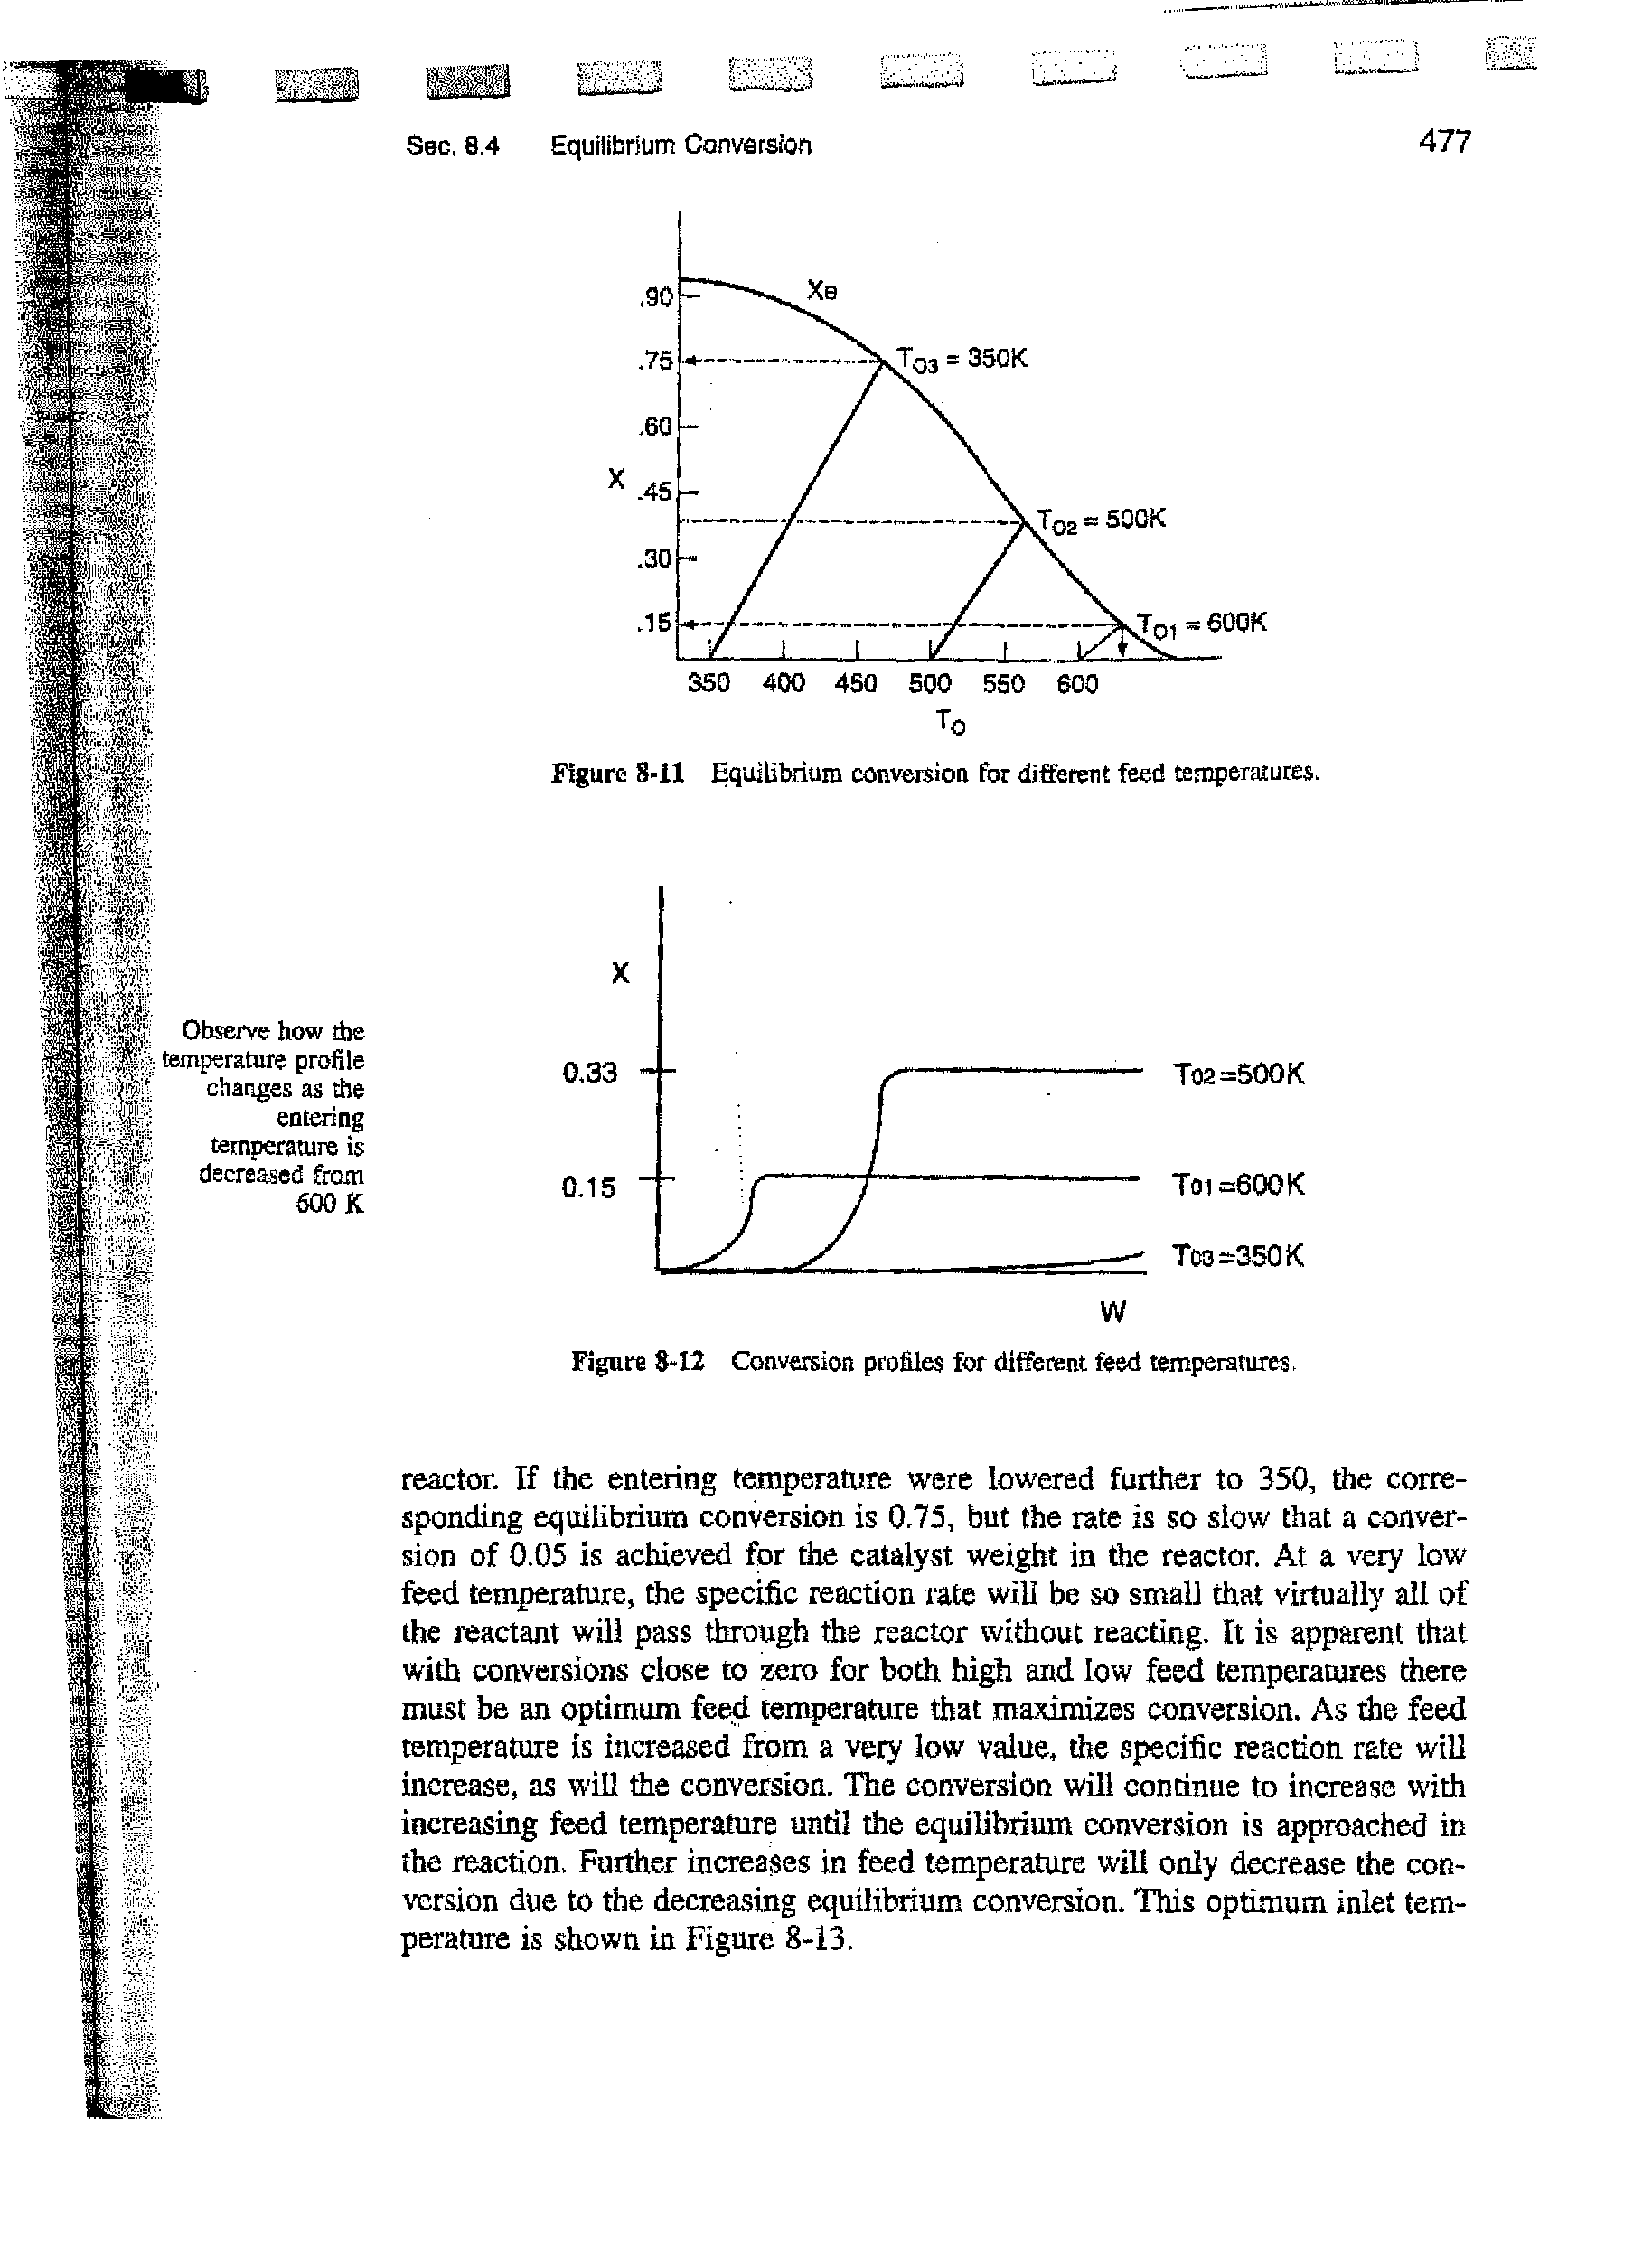 Figure S-11 Equilibrium conversion for different feed temperatures.